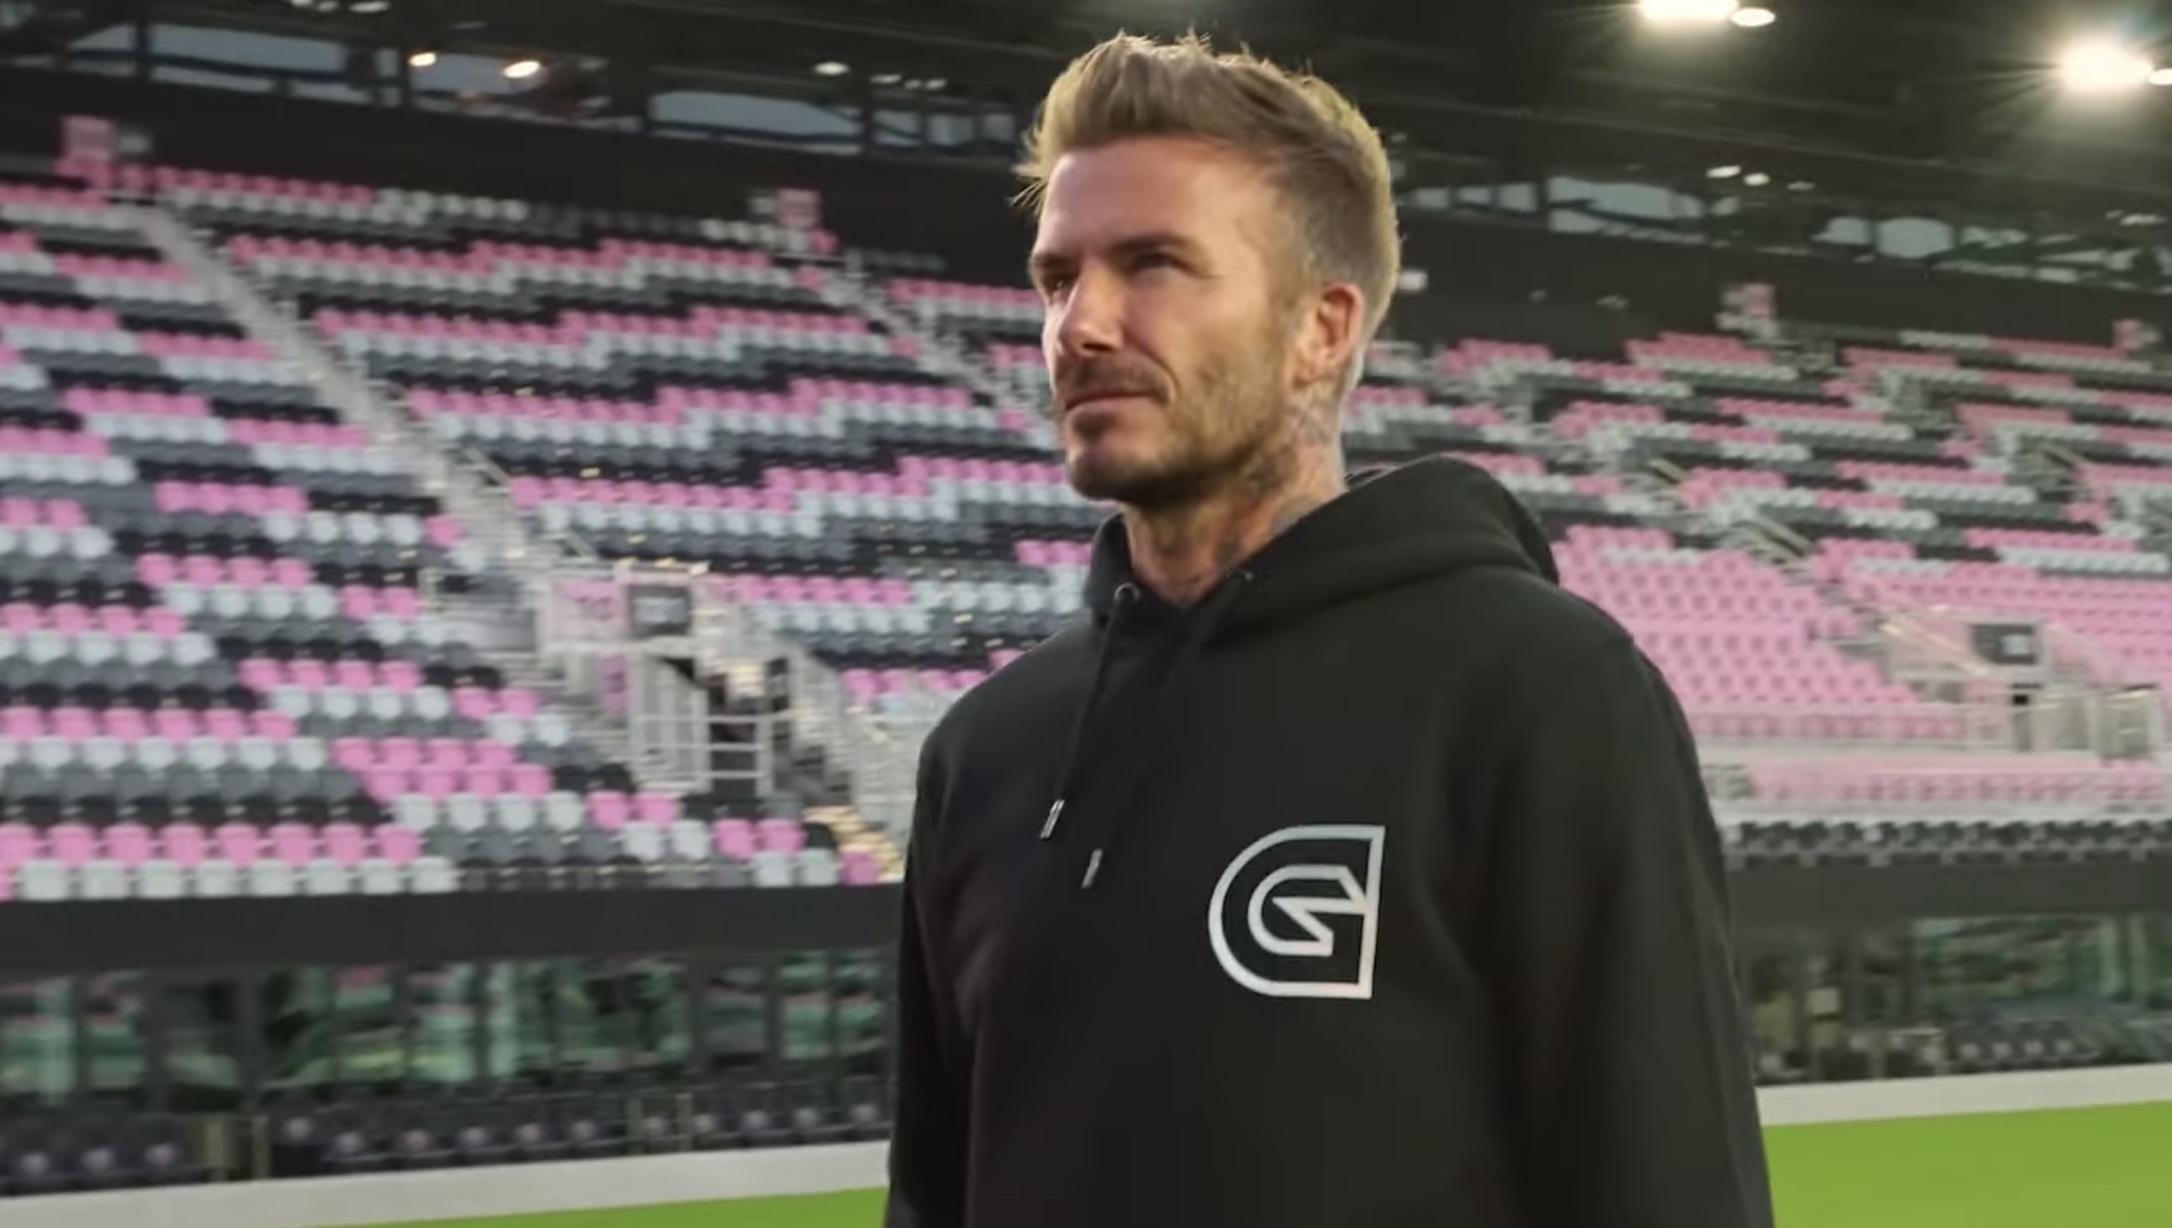 Beckham wearing Guild merchandise.